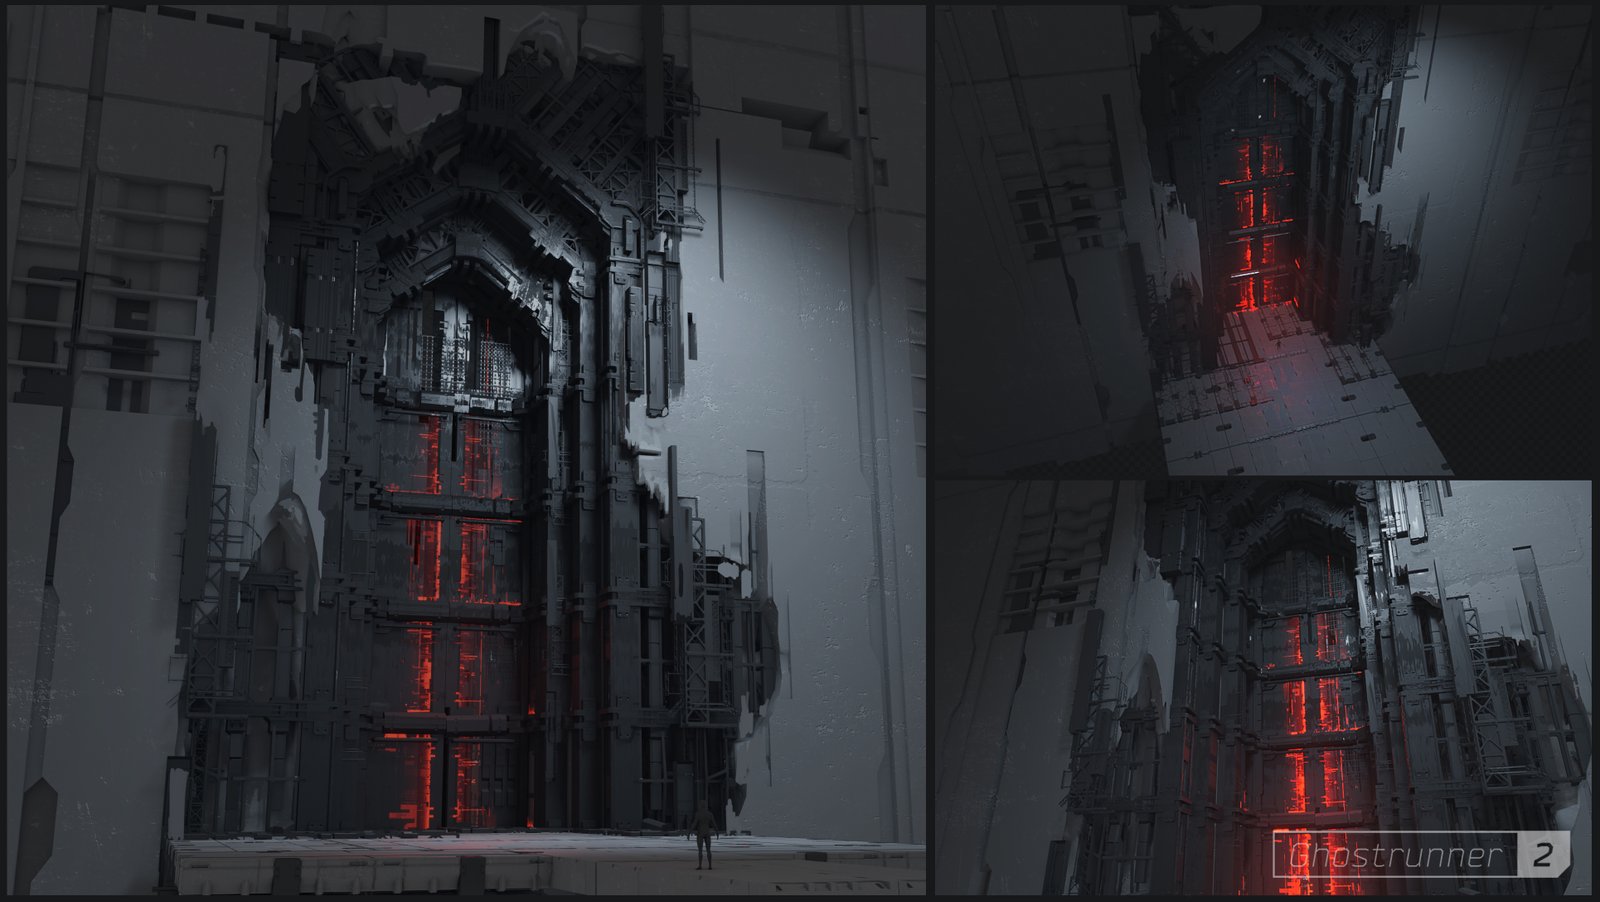 Ghostrunner 2 concept art of a large, digital doorway